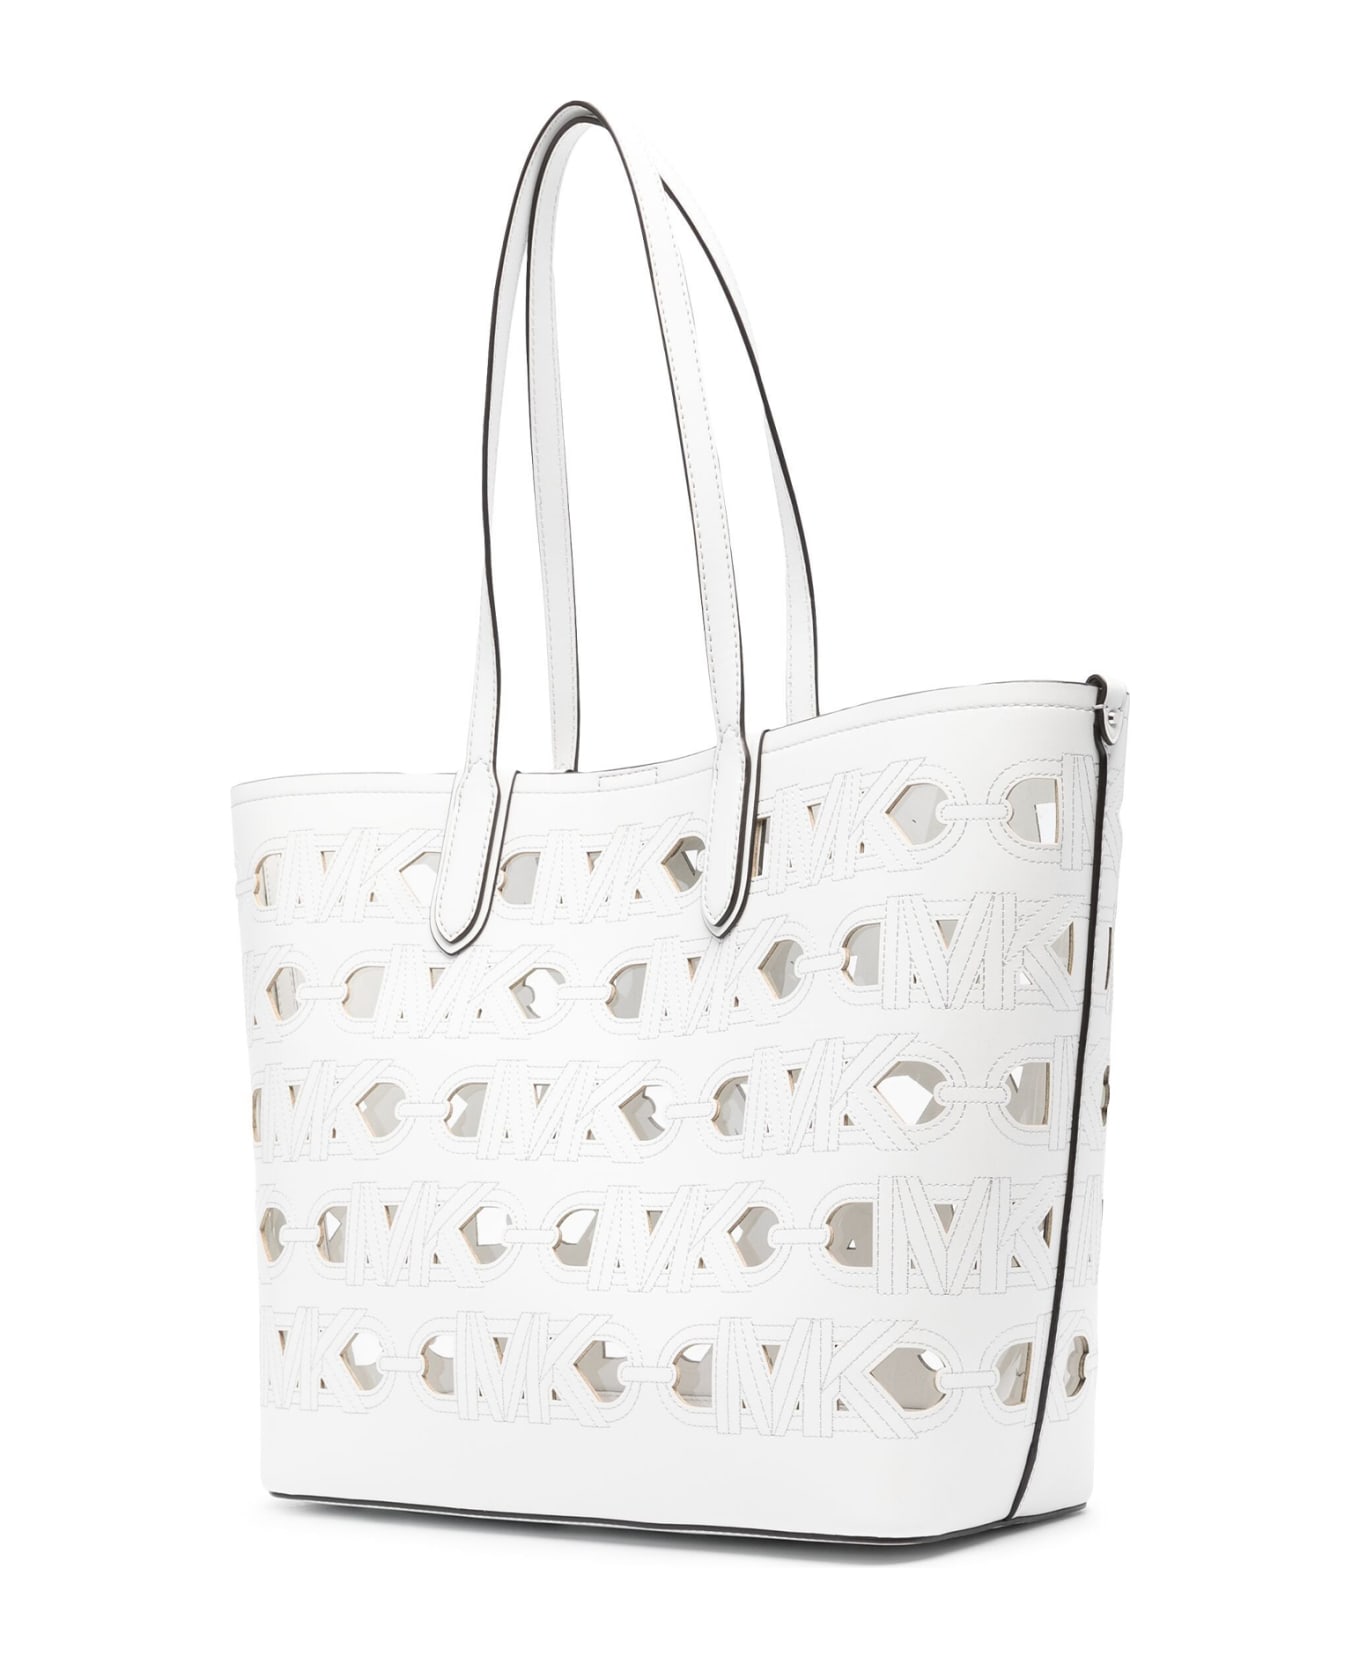 Michael Kors White Cut Out Shopping Bag - OPTIC WHITE